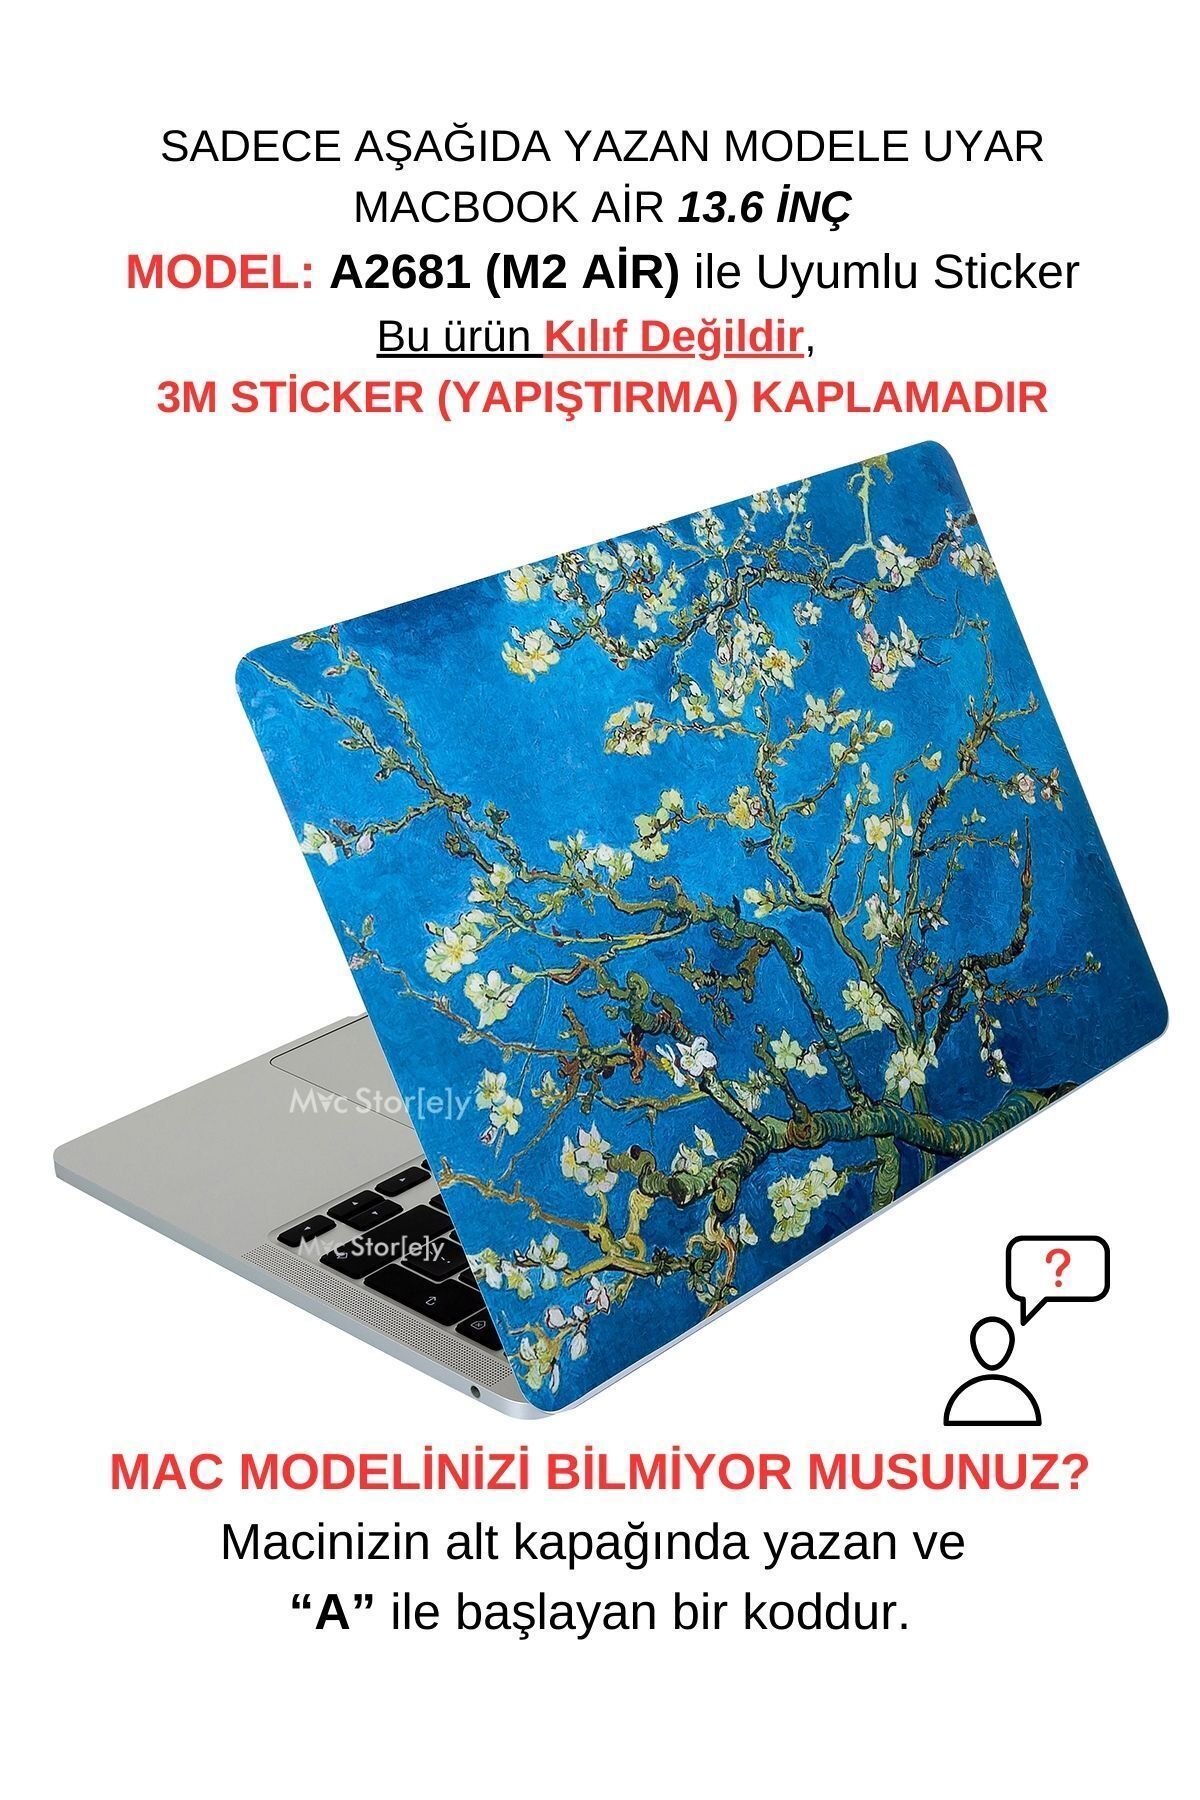 Mcstorey Macbook Air Kılıf 13.6inç M2-m3, Sticker Yapıştırma Kaplama Flower03nl A2681 A3113 Ile Uyumlu